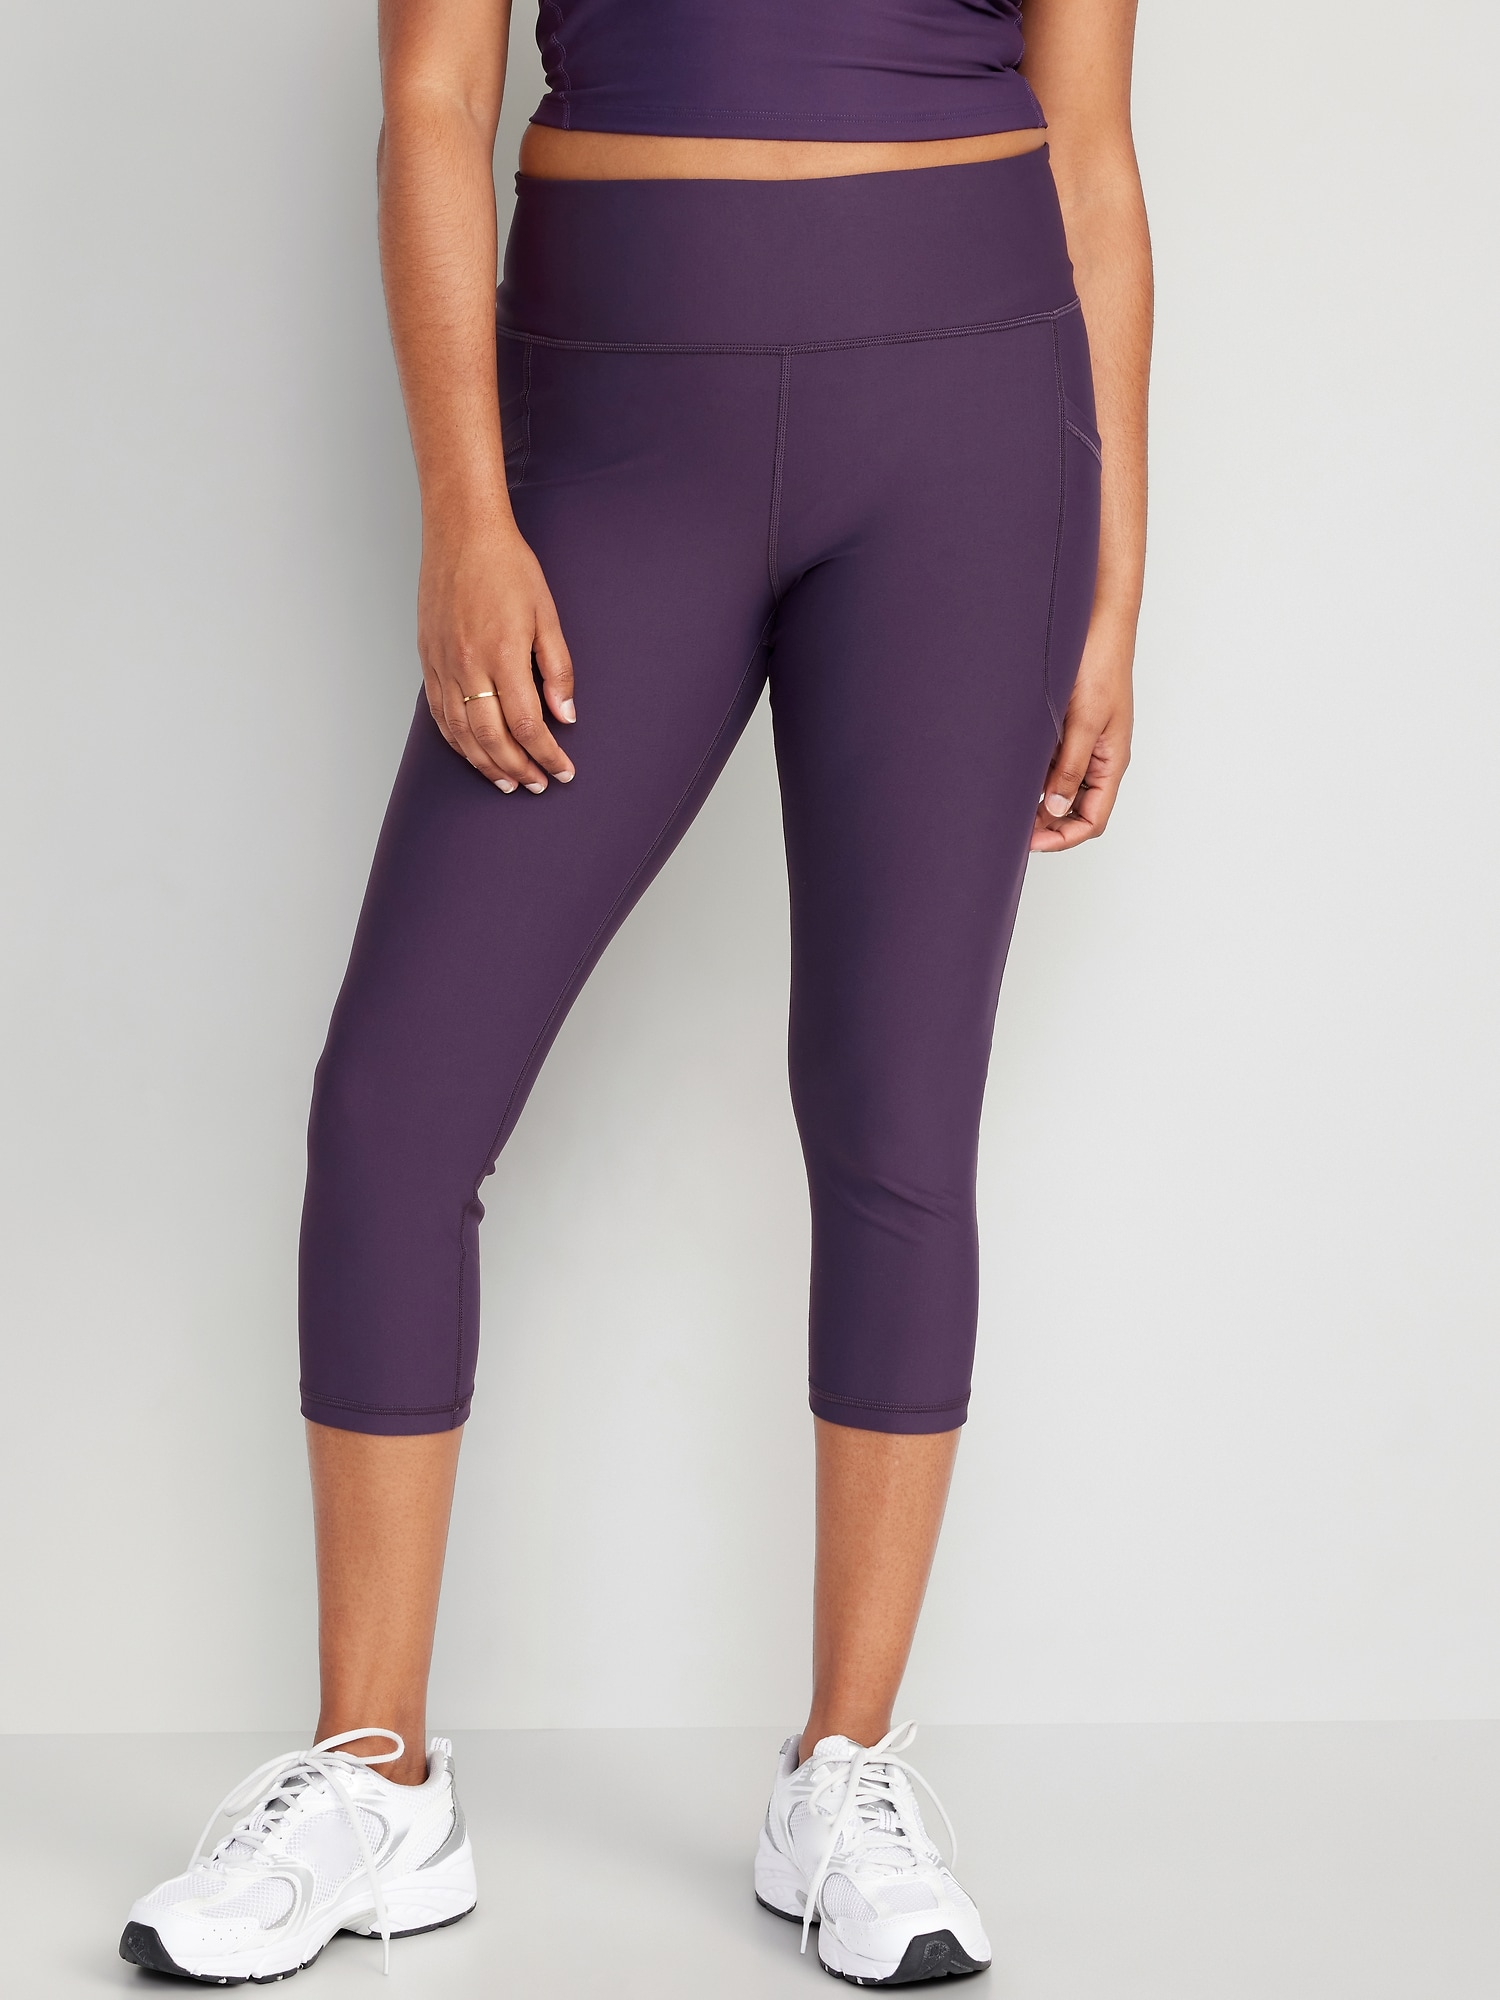 Zella Lavendar Leggings Yoga Pants Long Ankle Purple Large